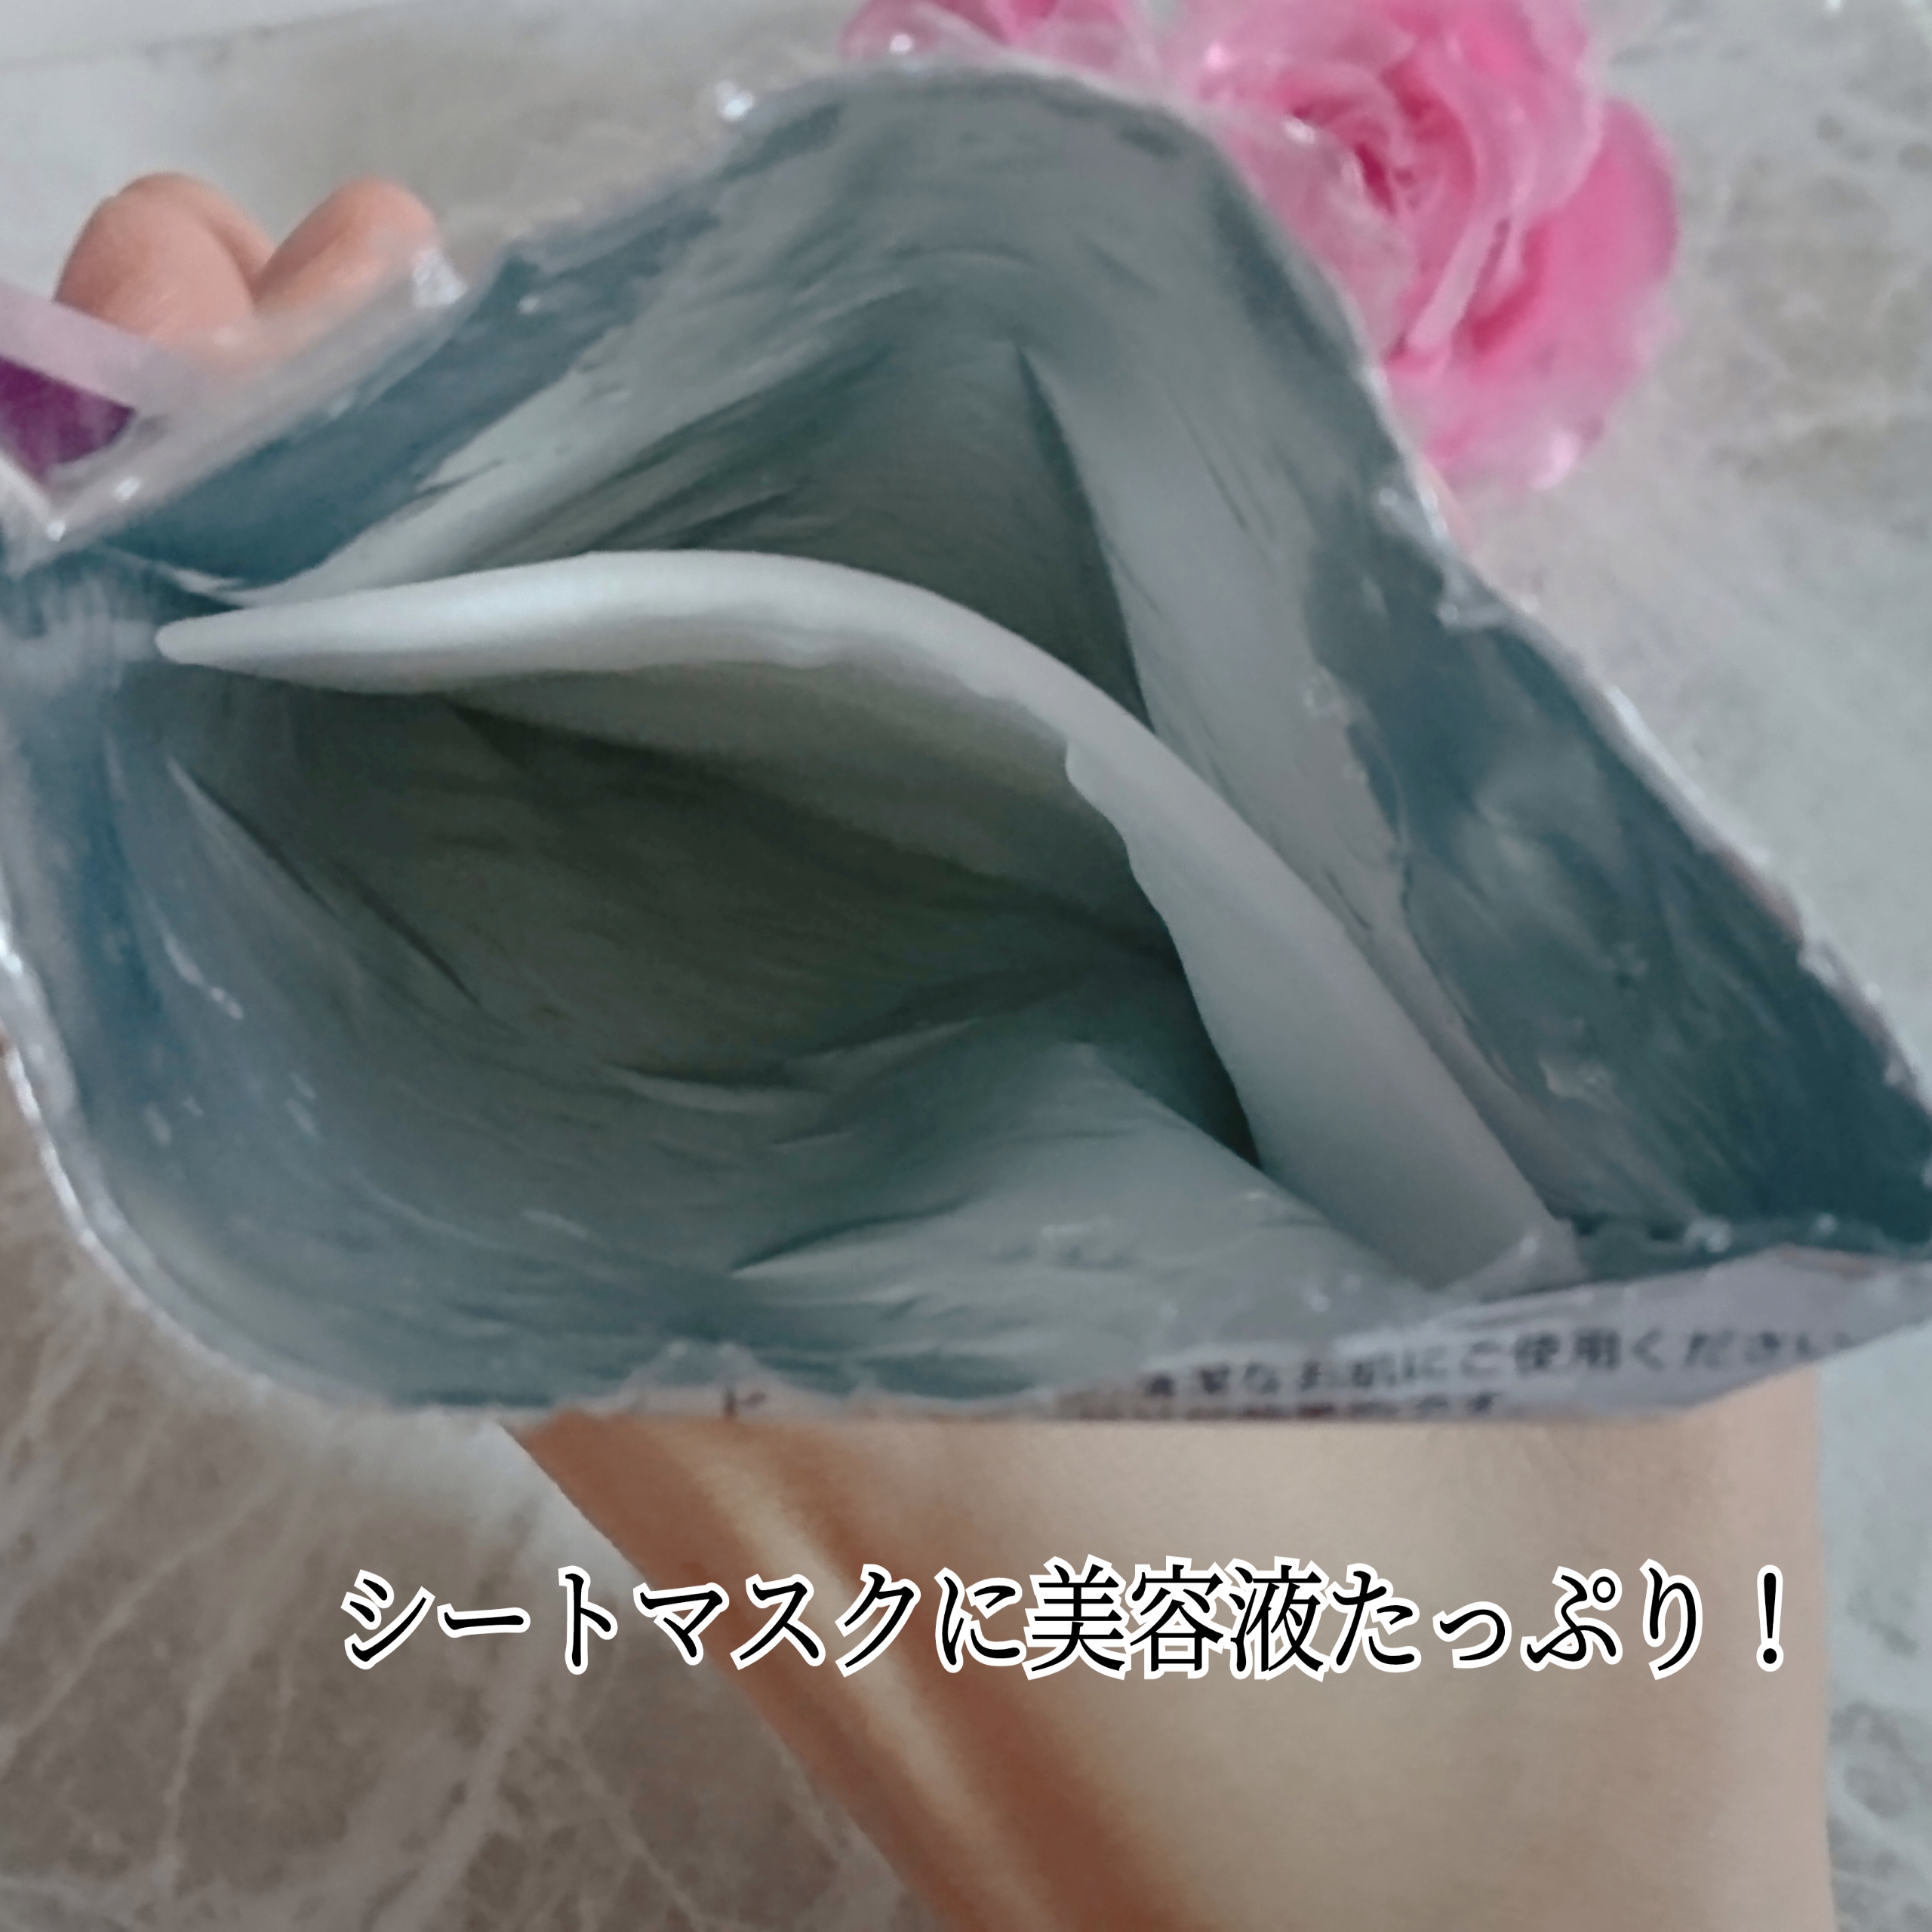 Ryuspa Refining フェイスシートマスクを使ったYuKaRi♡さんのクチコミ画像4